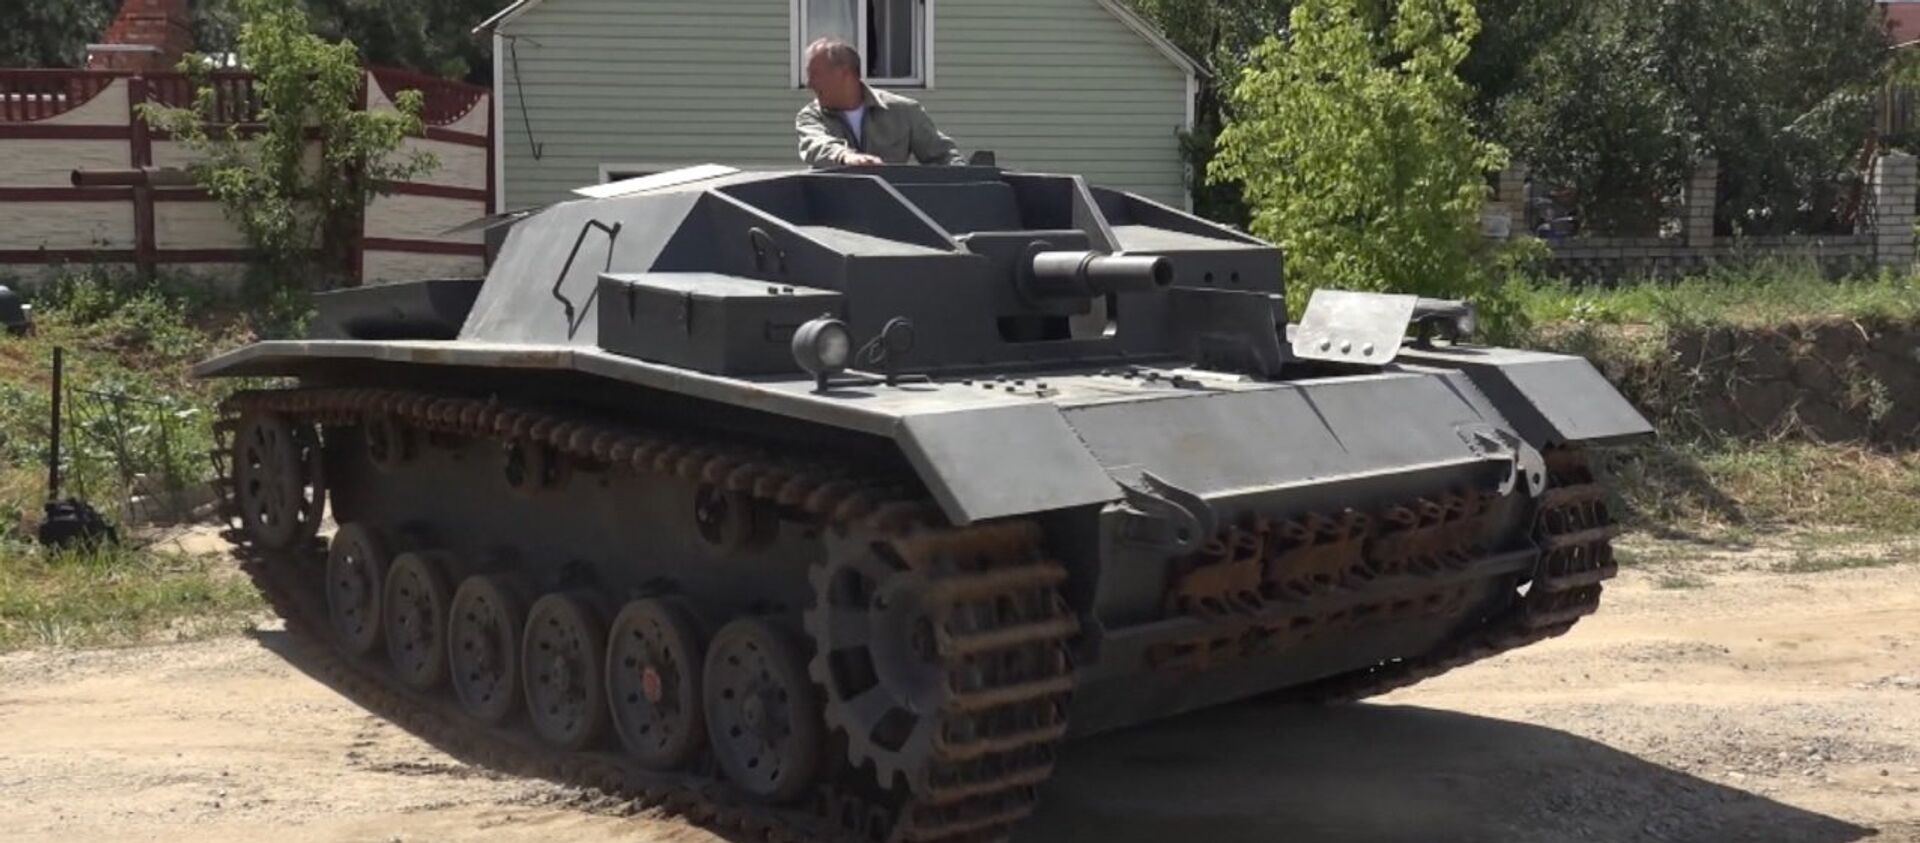 Este ruso replica tanques en su garaje - Sputnik Mundo, 1920, 22.07.2018